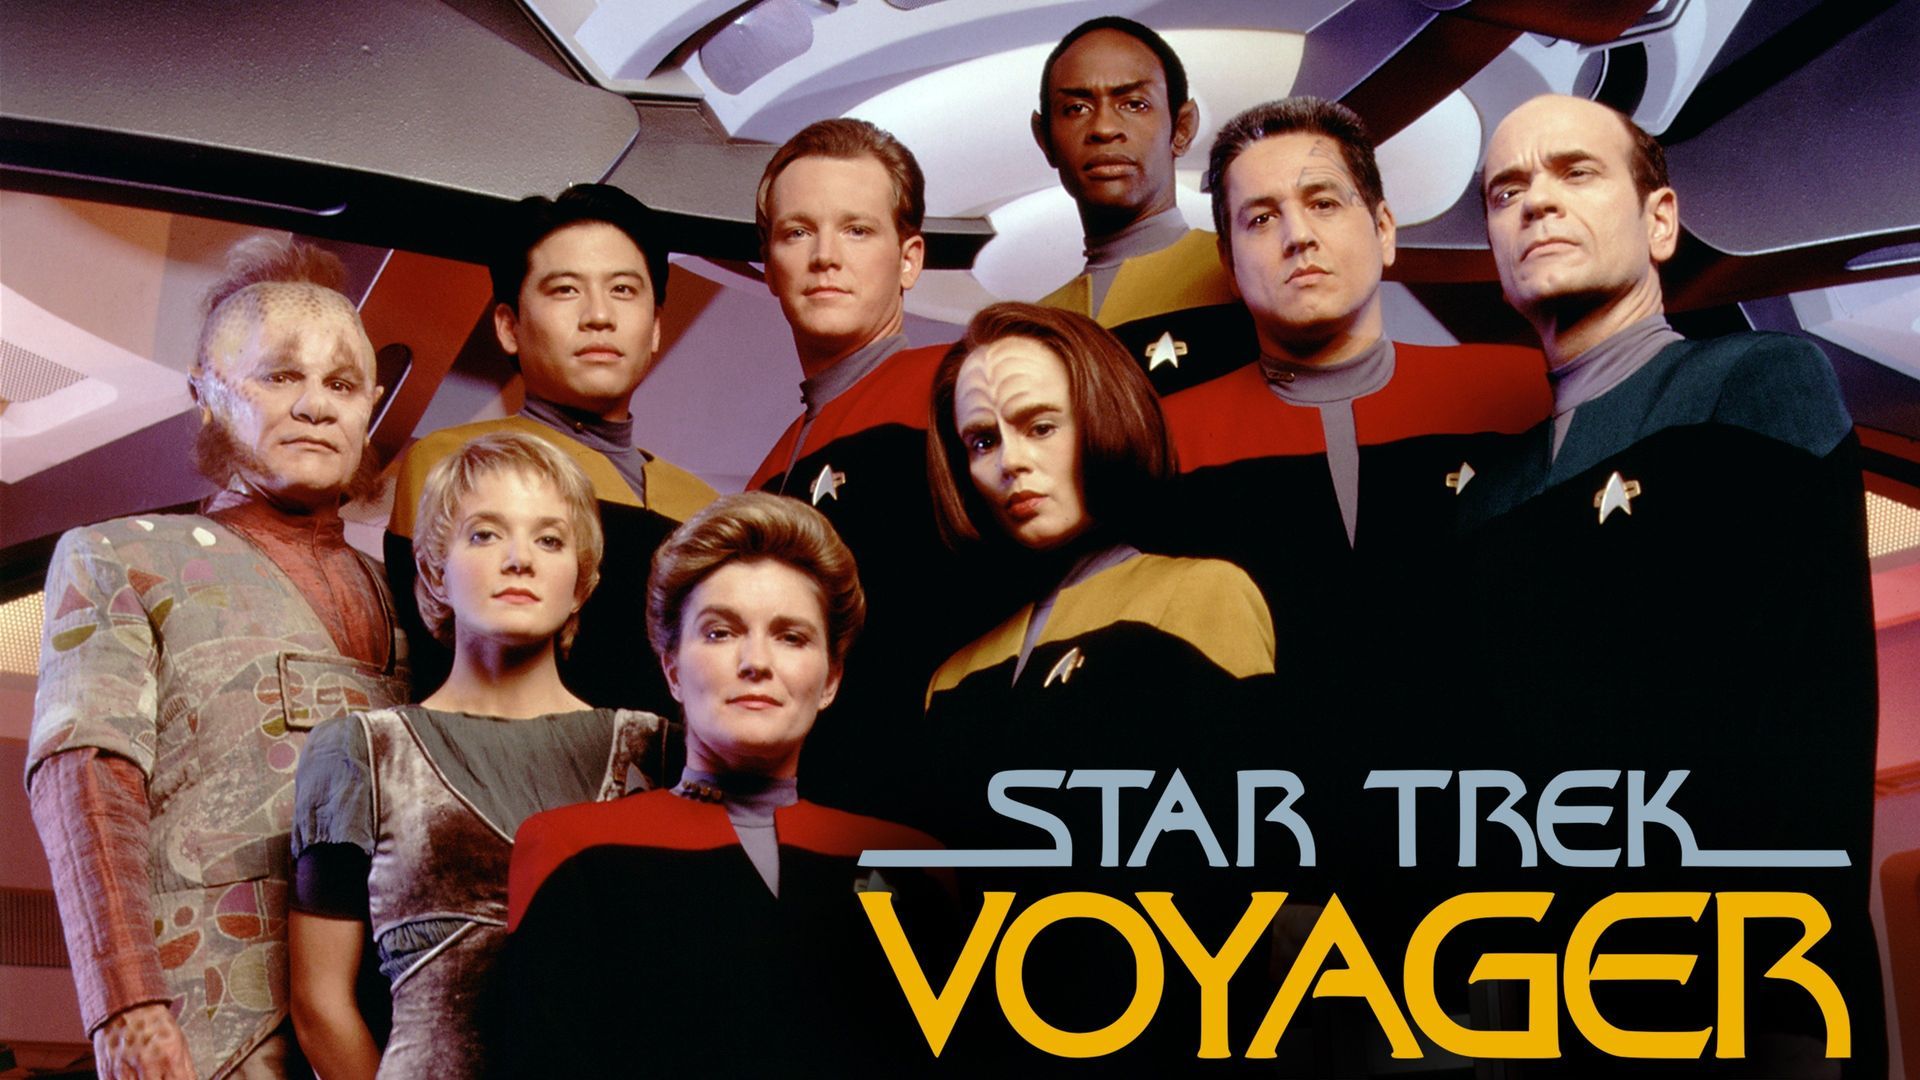 voyager season 3 episode 11 cast